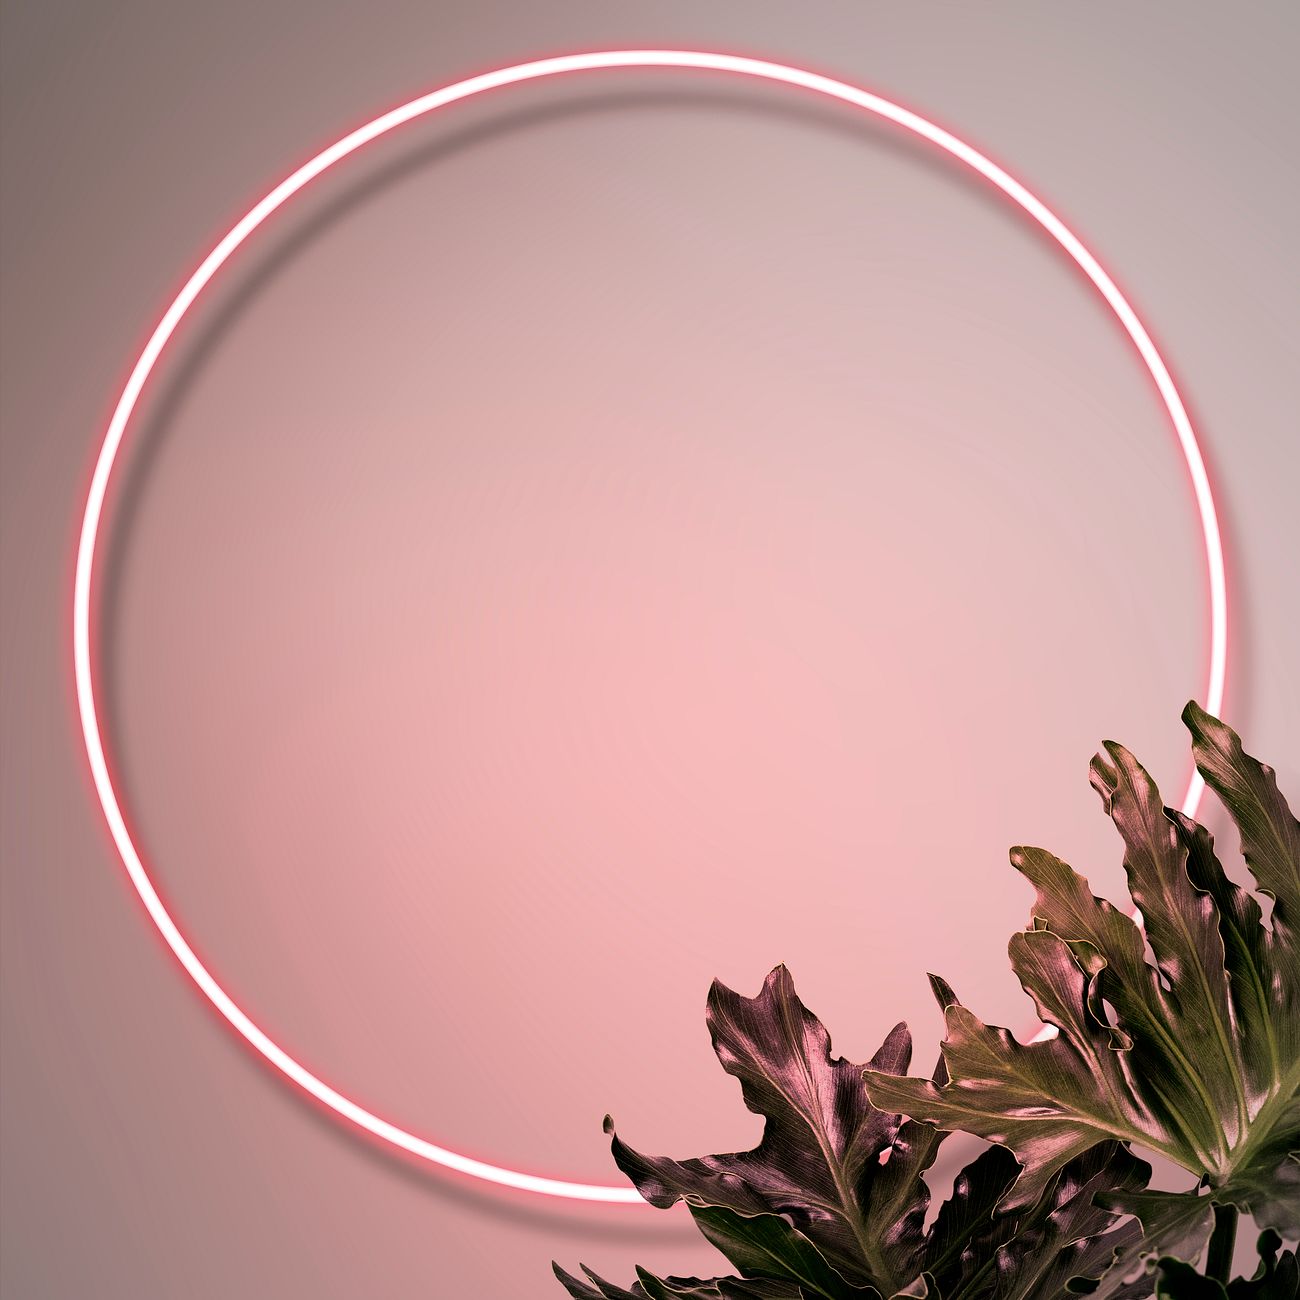 Download Neon botanical circle frame mockup | Royalty free illustration - 1223352